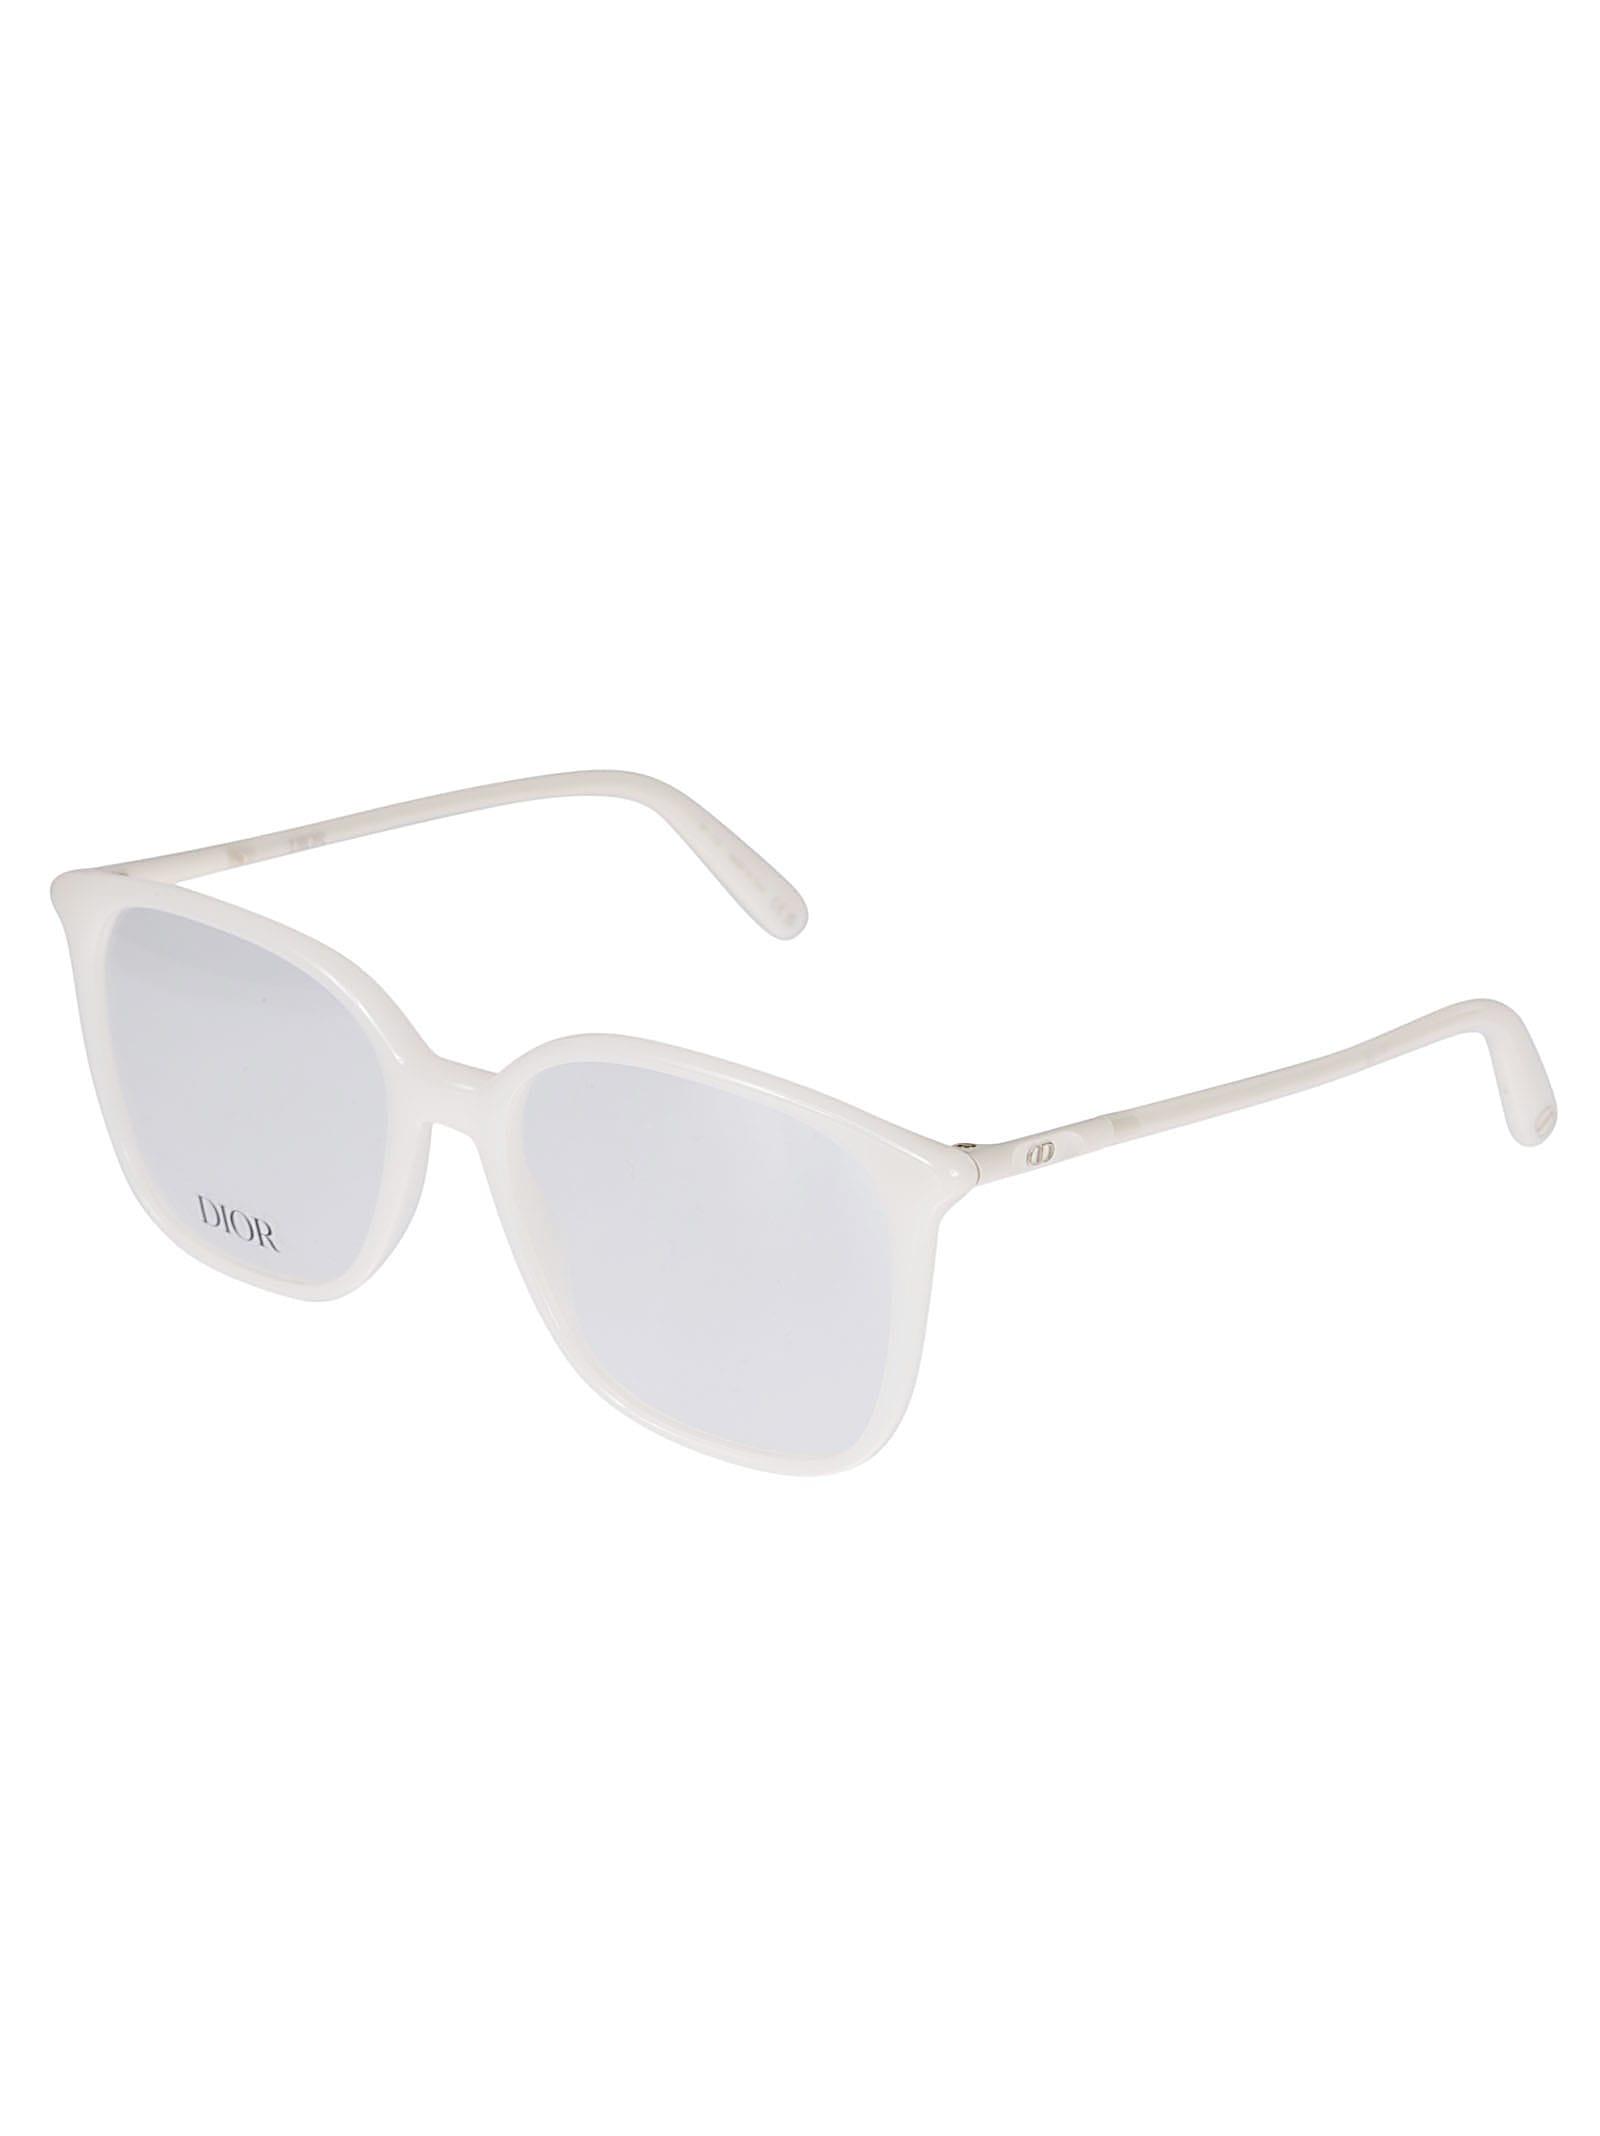 Dior Mini Cd Glasses in White | Lyst